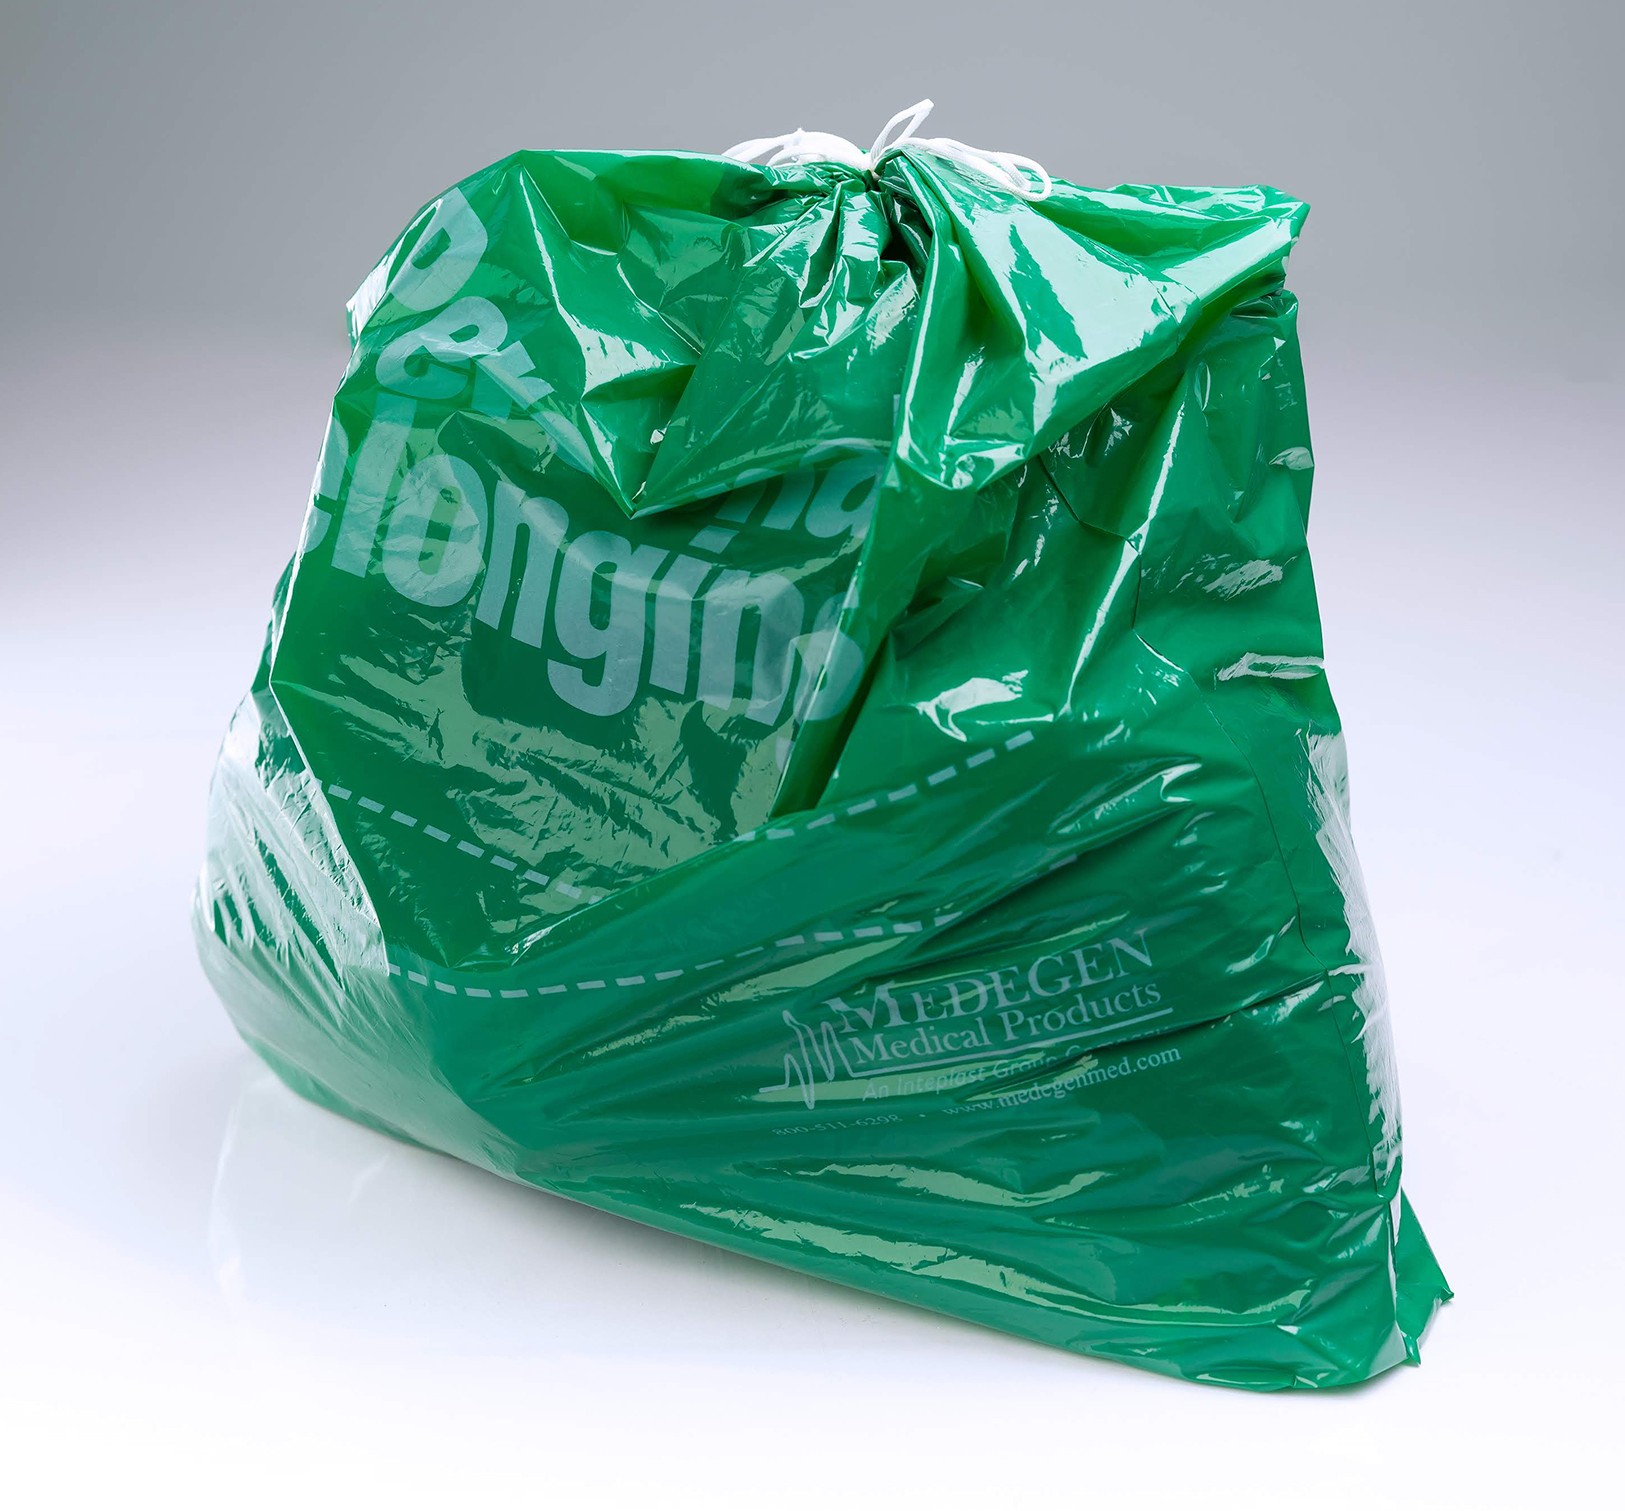 Healthcare Patient Products Patient Belongings Bags